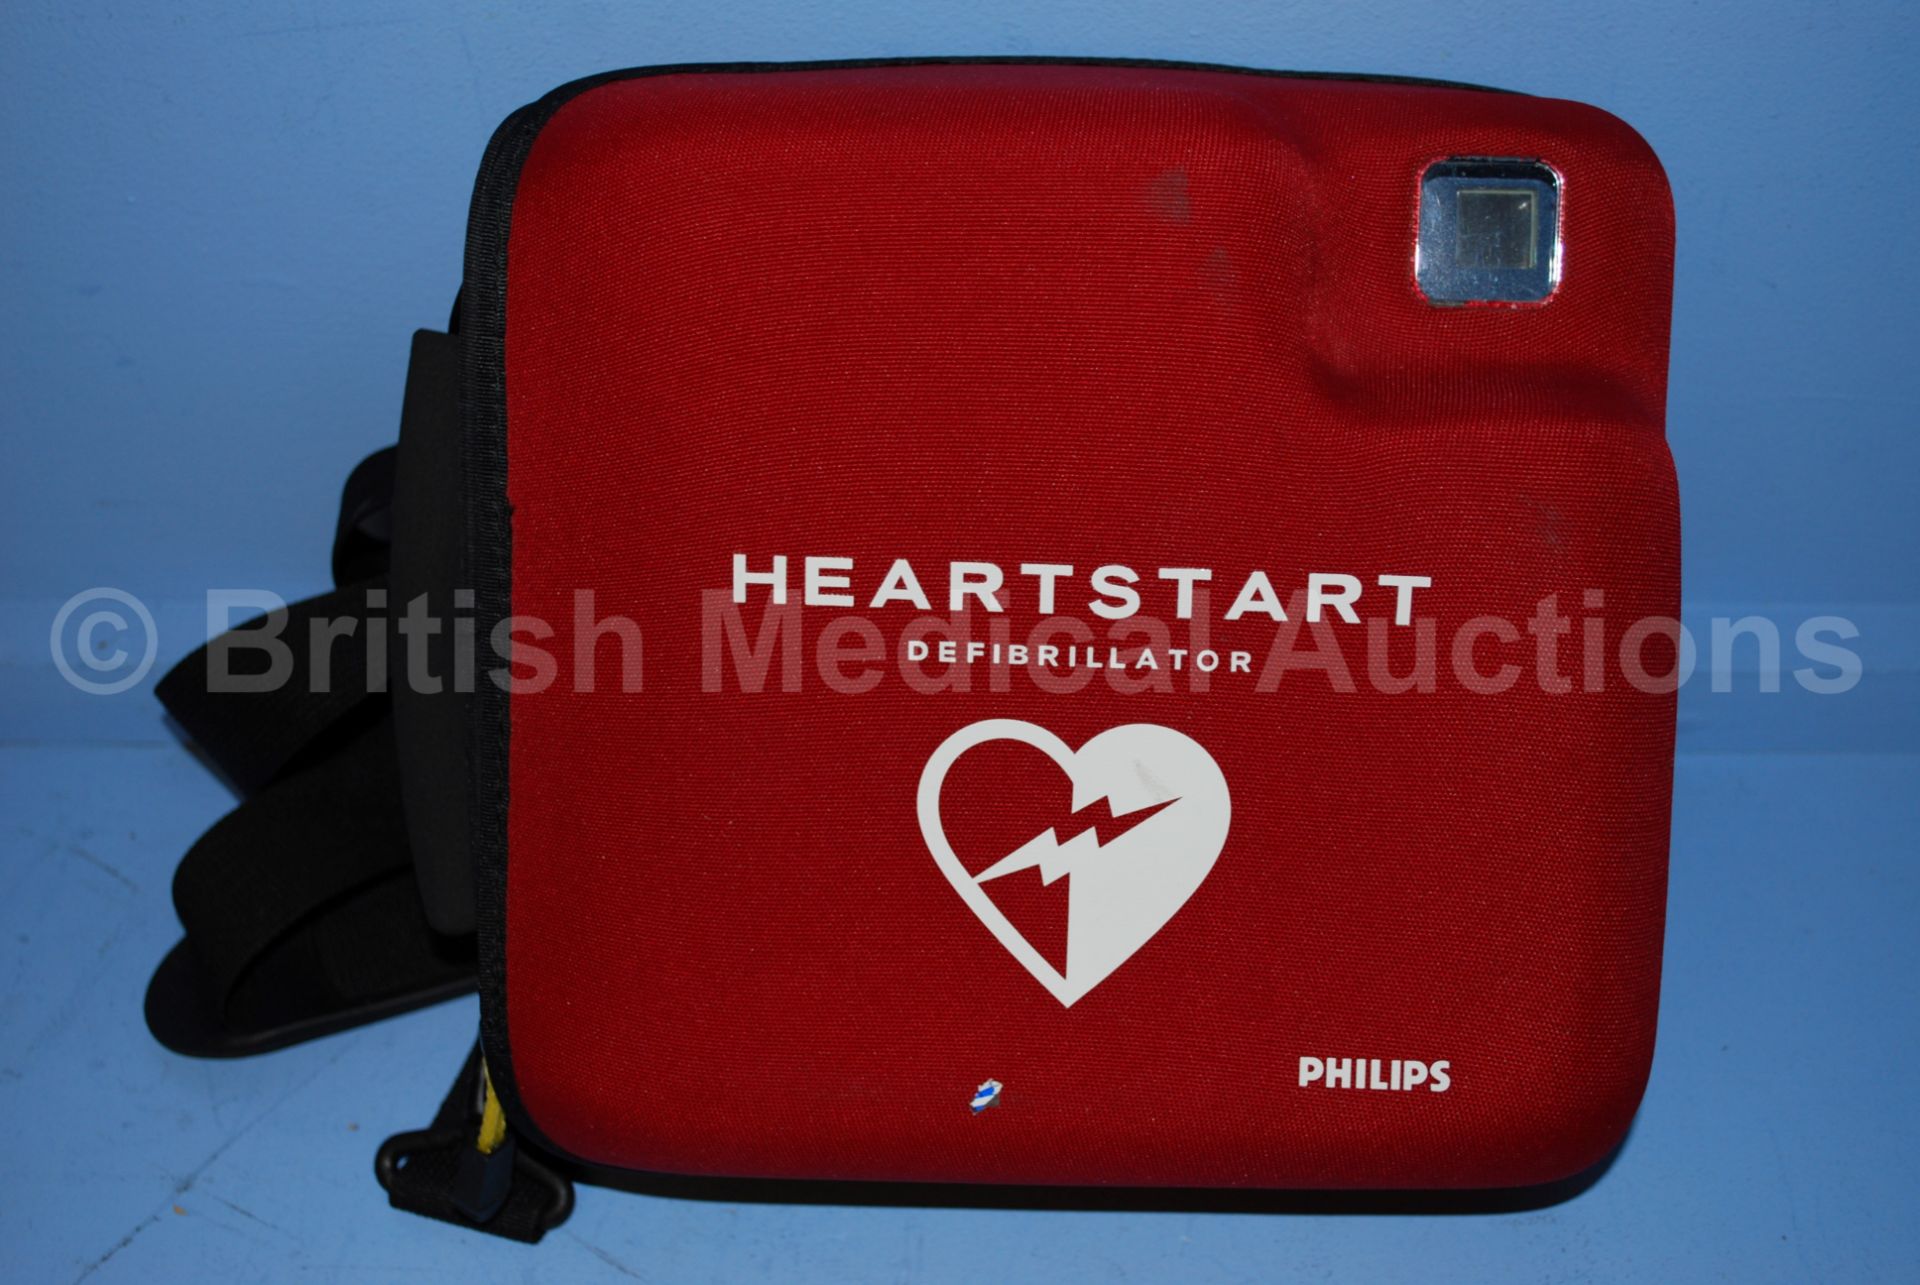 Philips Heartstart FR2+ Defibrillator in Red Case - Image 4 of 4